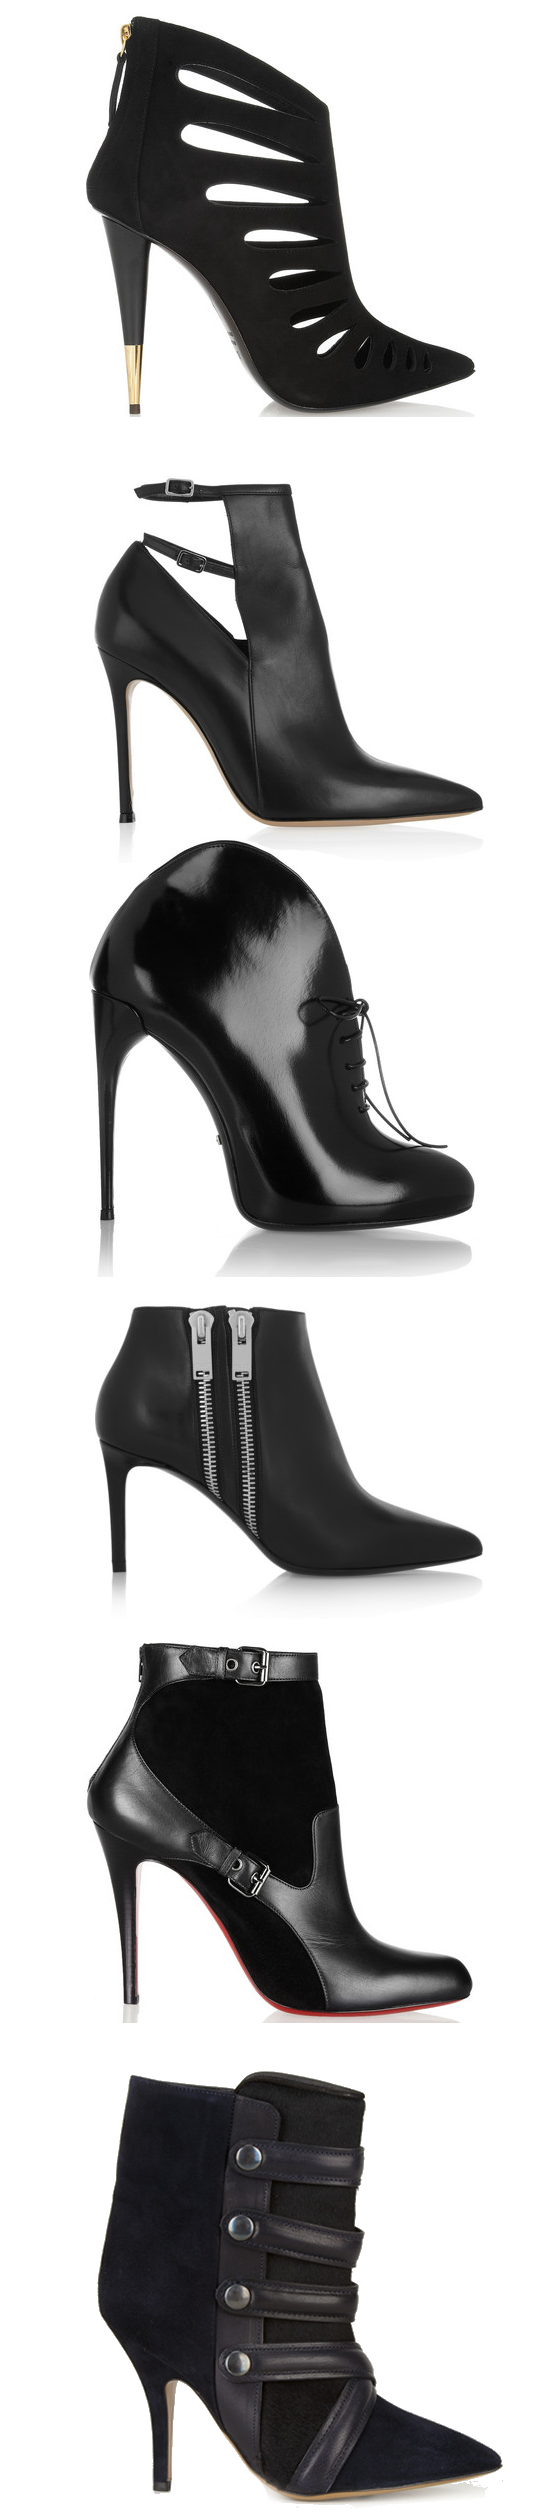 designer stiletto boots